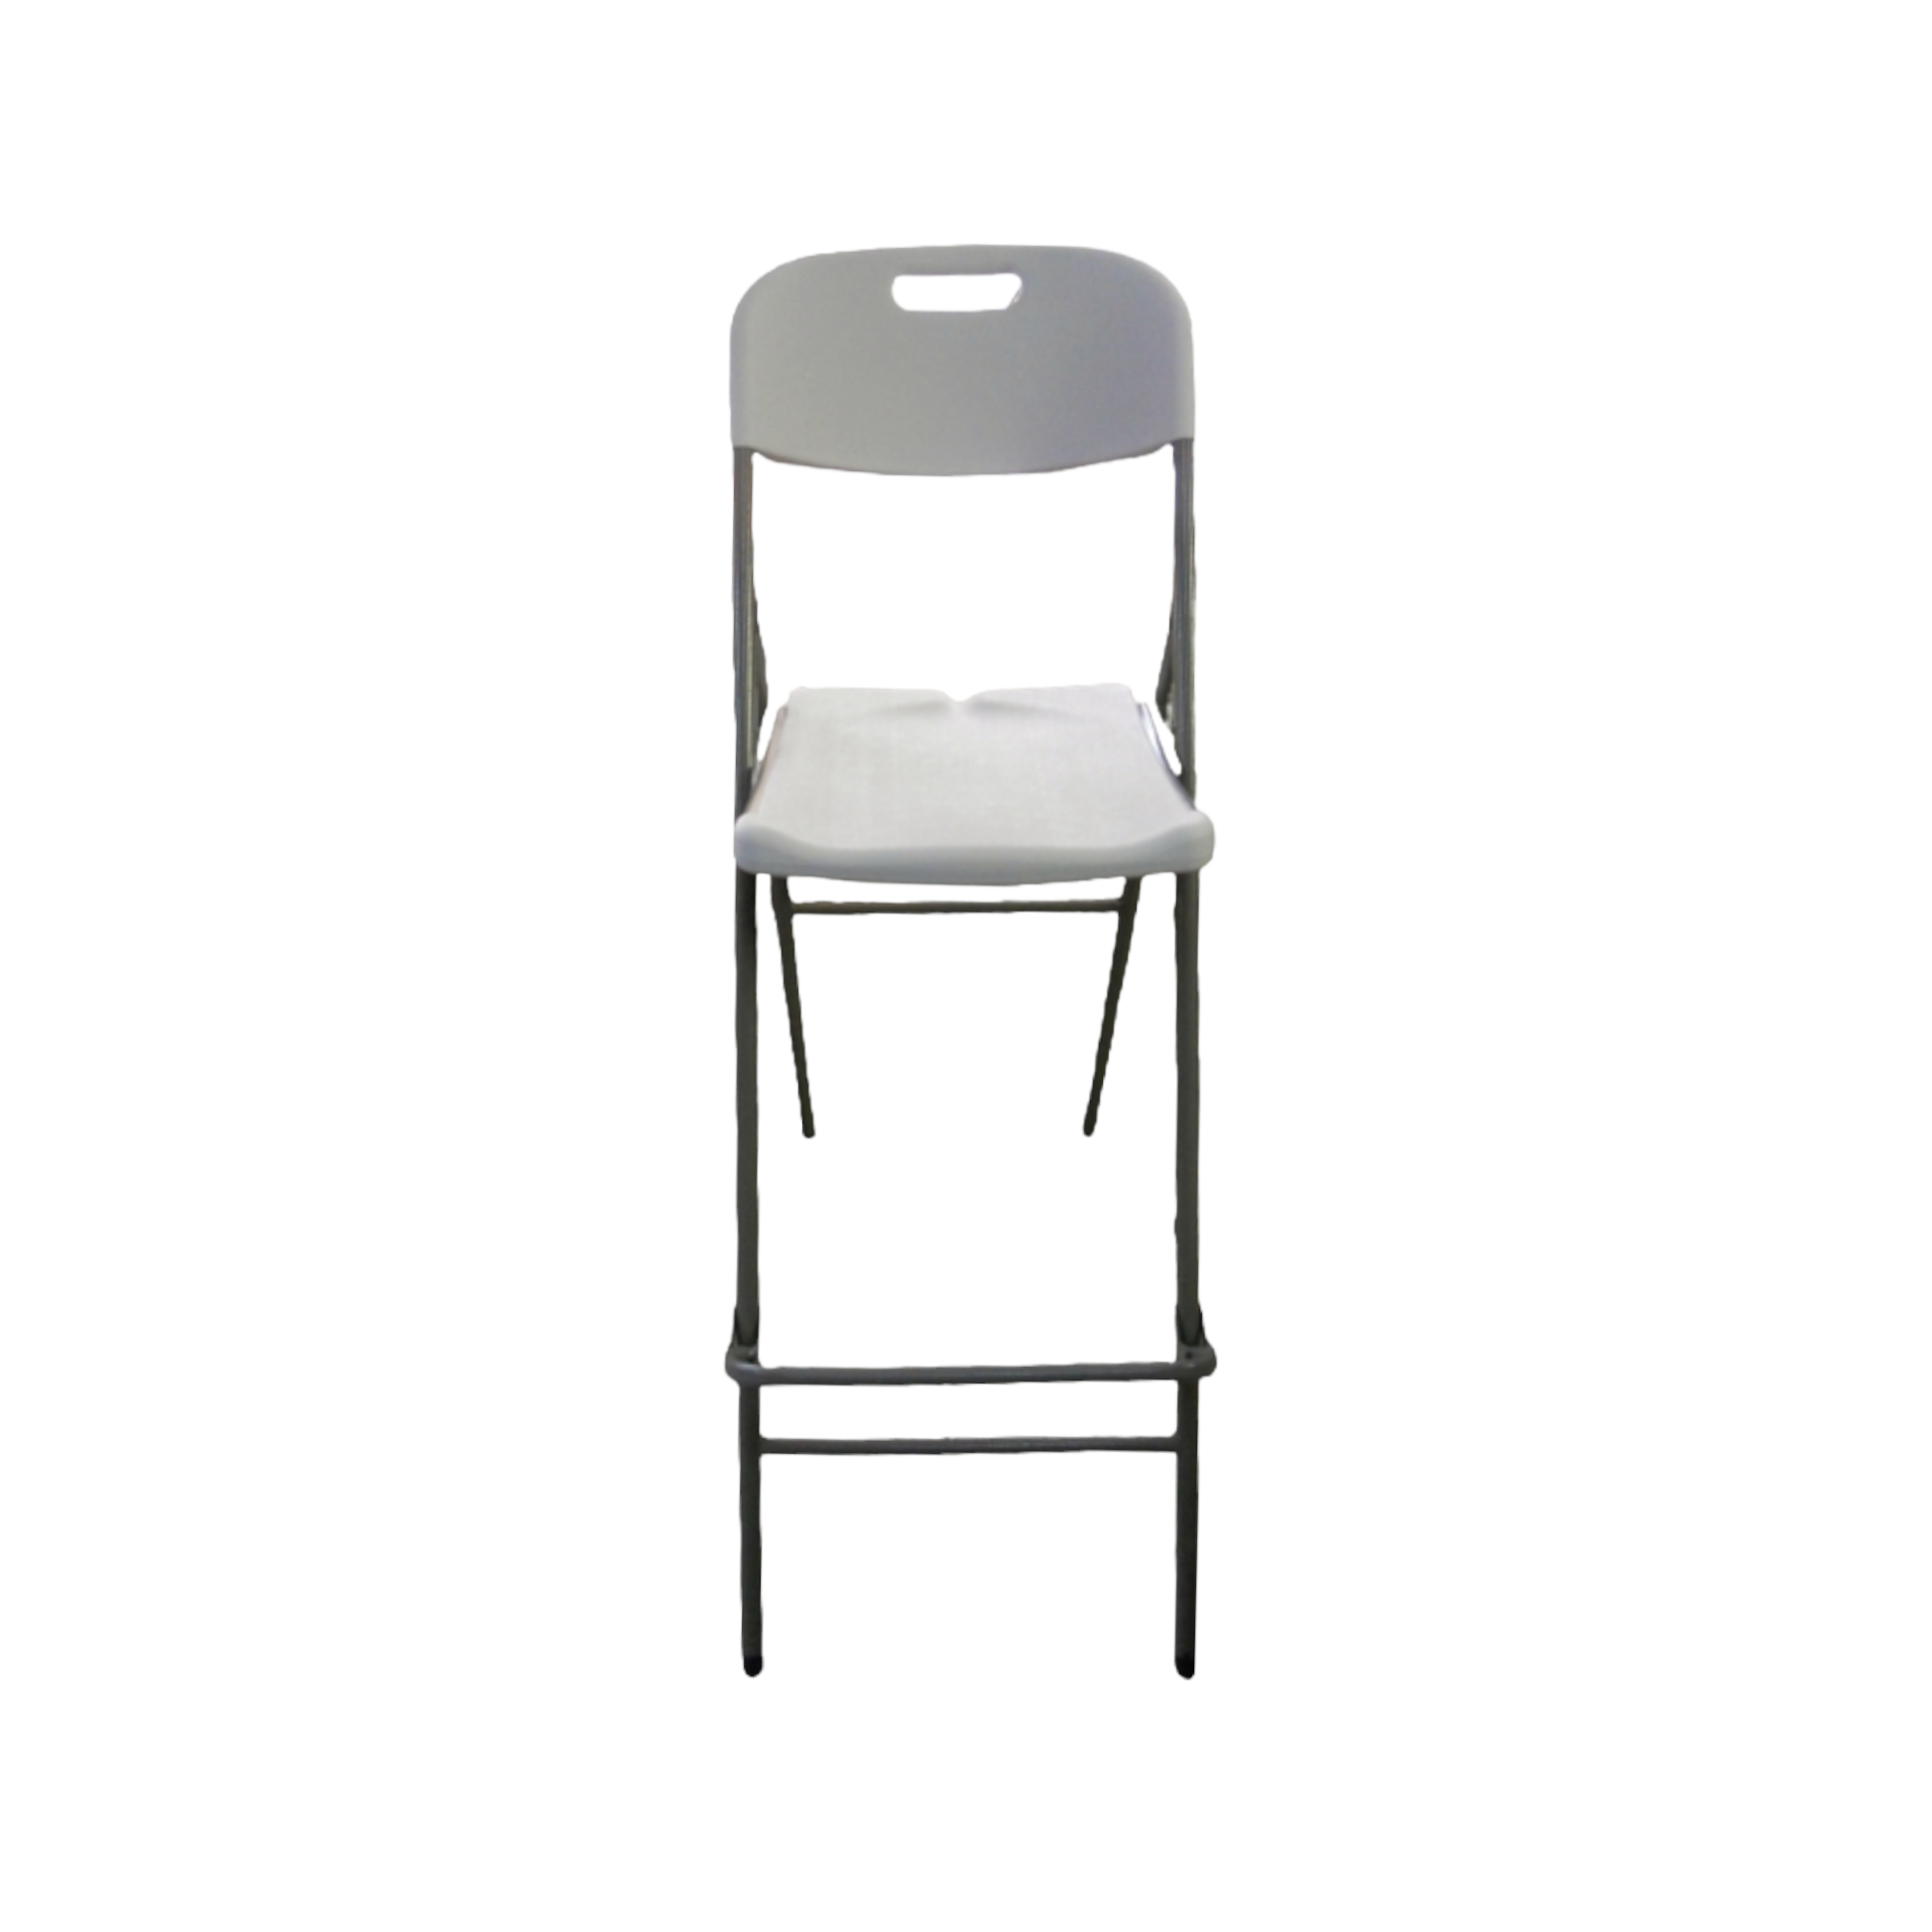 Folding Bistro Chair White 57x46x112cm